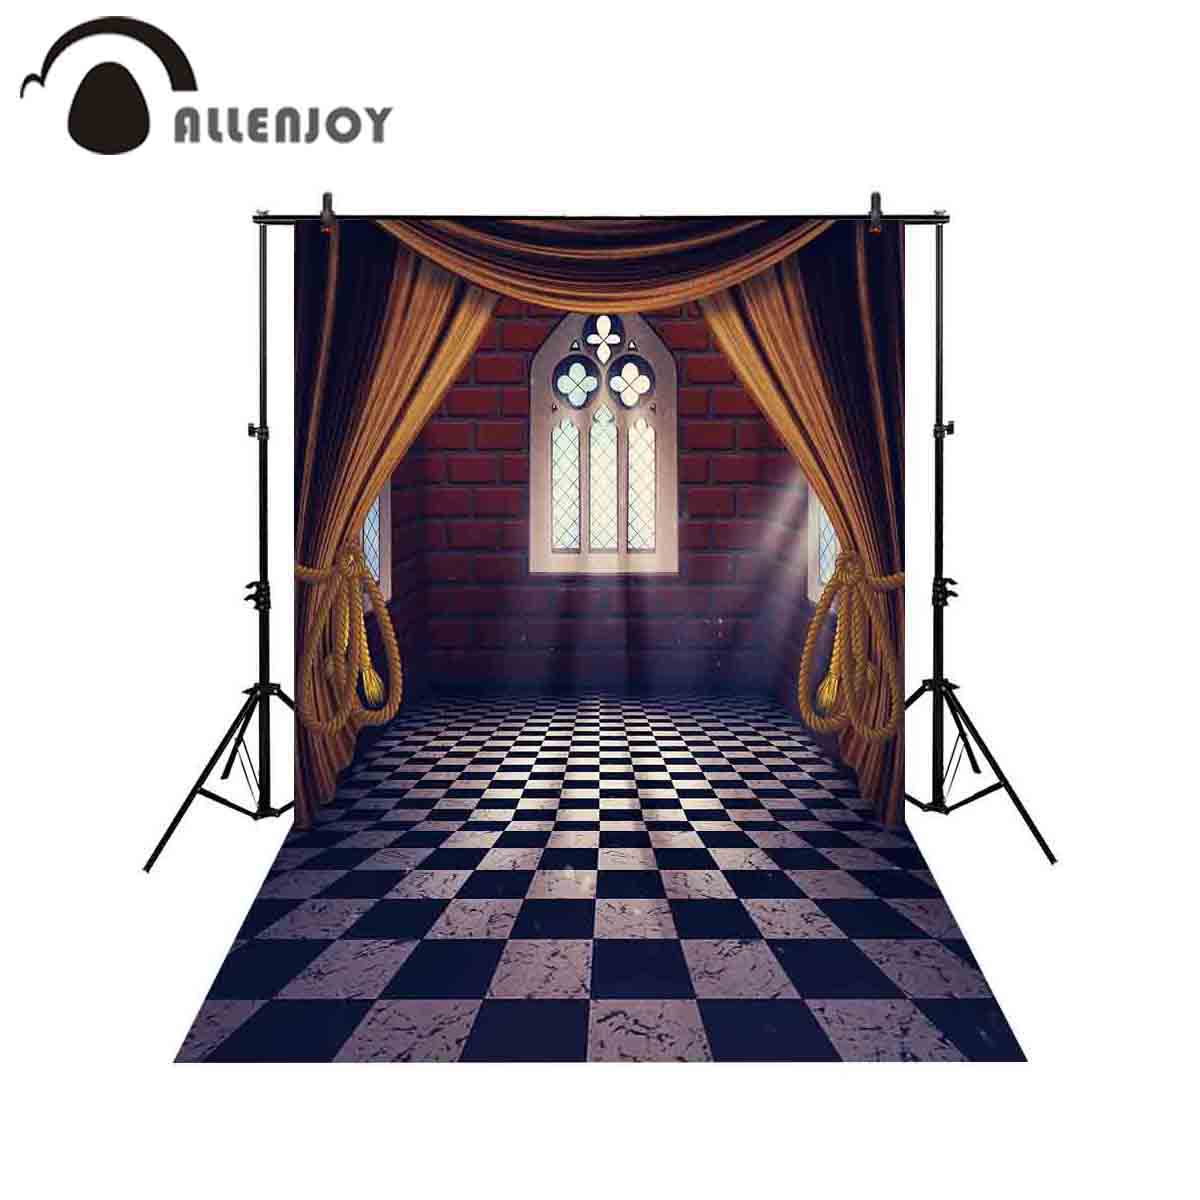 Allenjoy 사진 배경 고딕 창 궁전 커튼 바둑판 배경 photobooth photocall 패브릭 촬영 소품 새로운